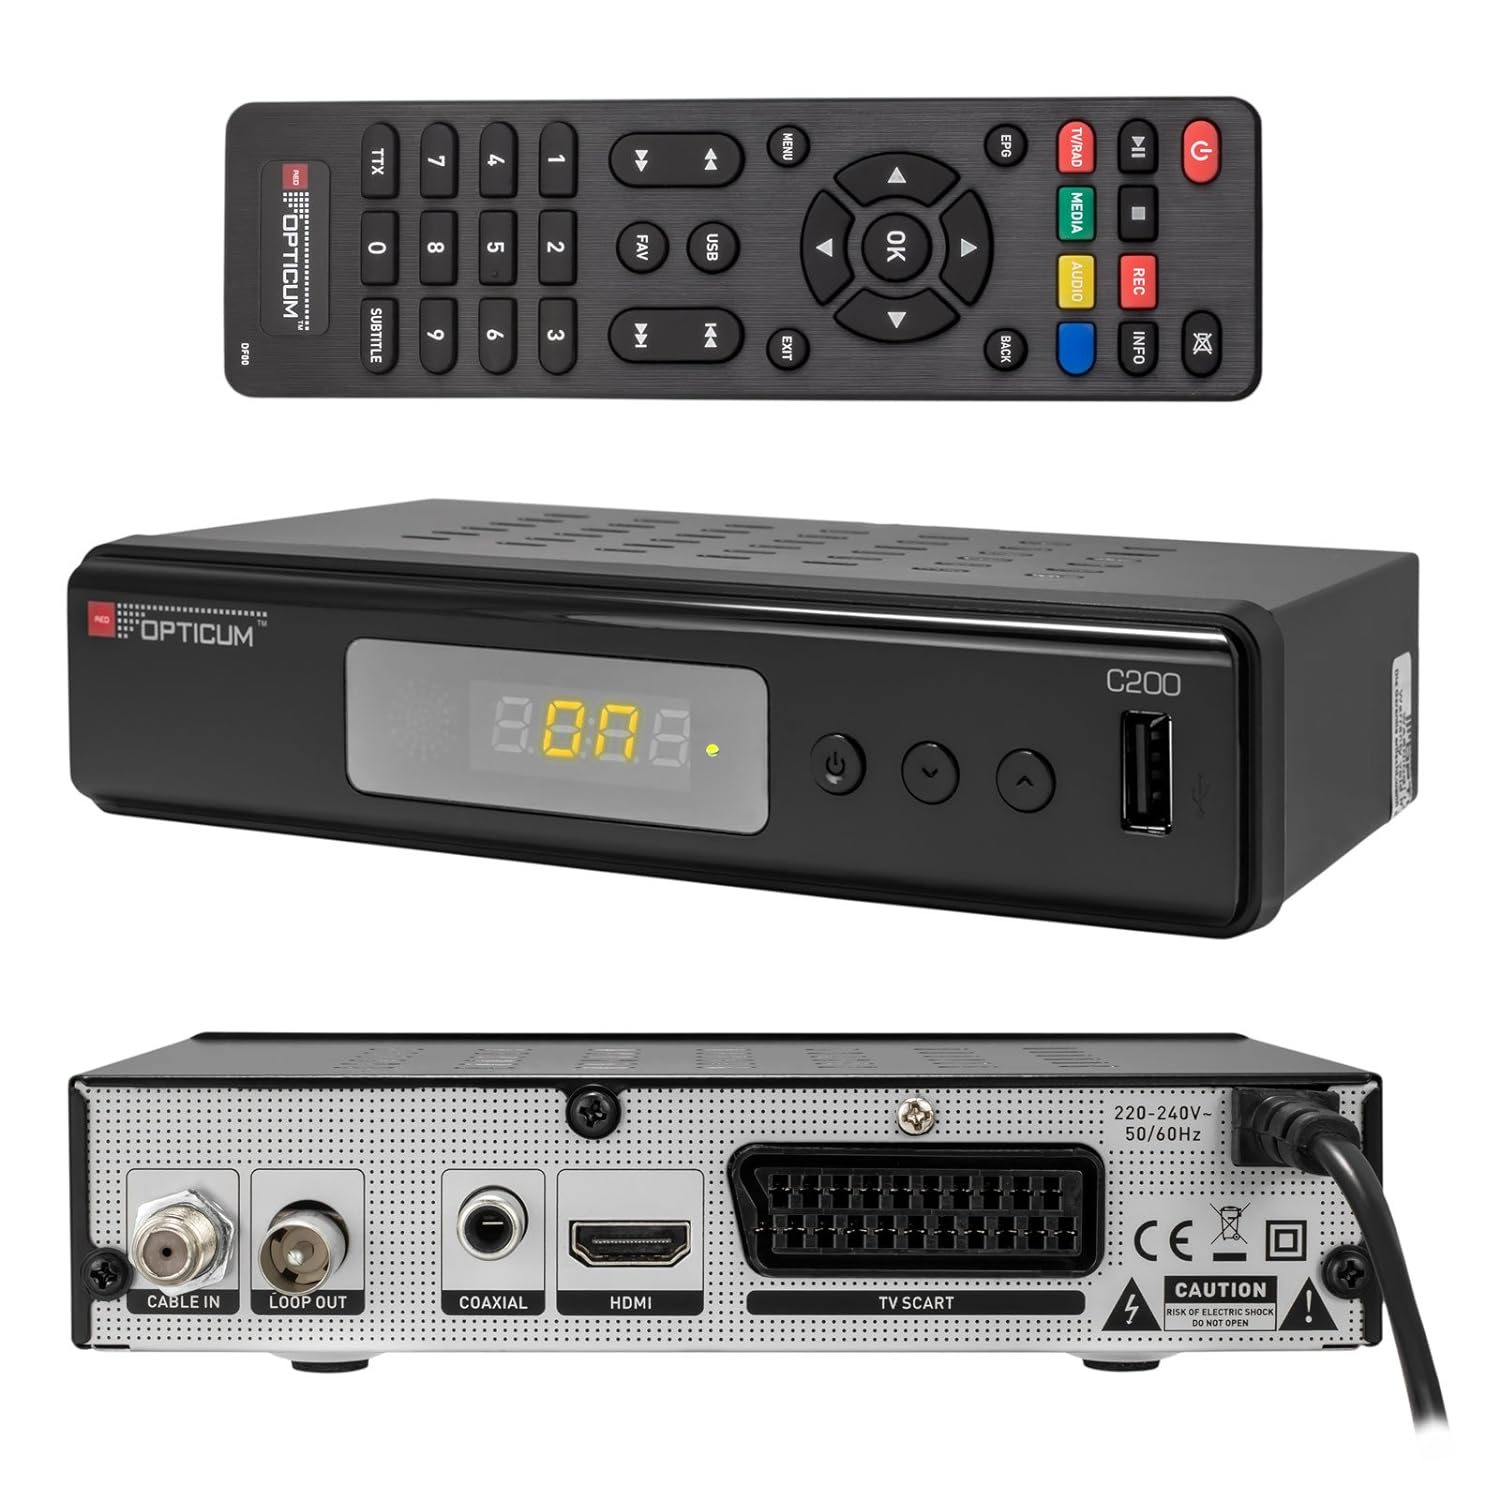 Dvb c кабельная. Приставка для кабельного телевидения DVB-C. Приставка Интелкросс DVB-C. Кабельный ресивер для телевизора. Антенна для цифровой приставки.